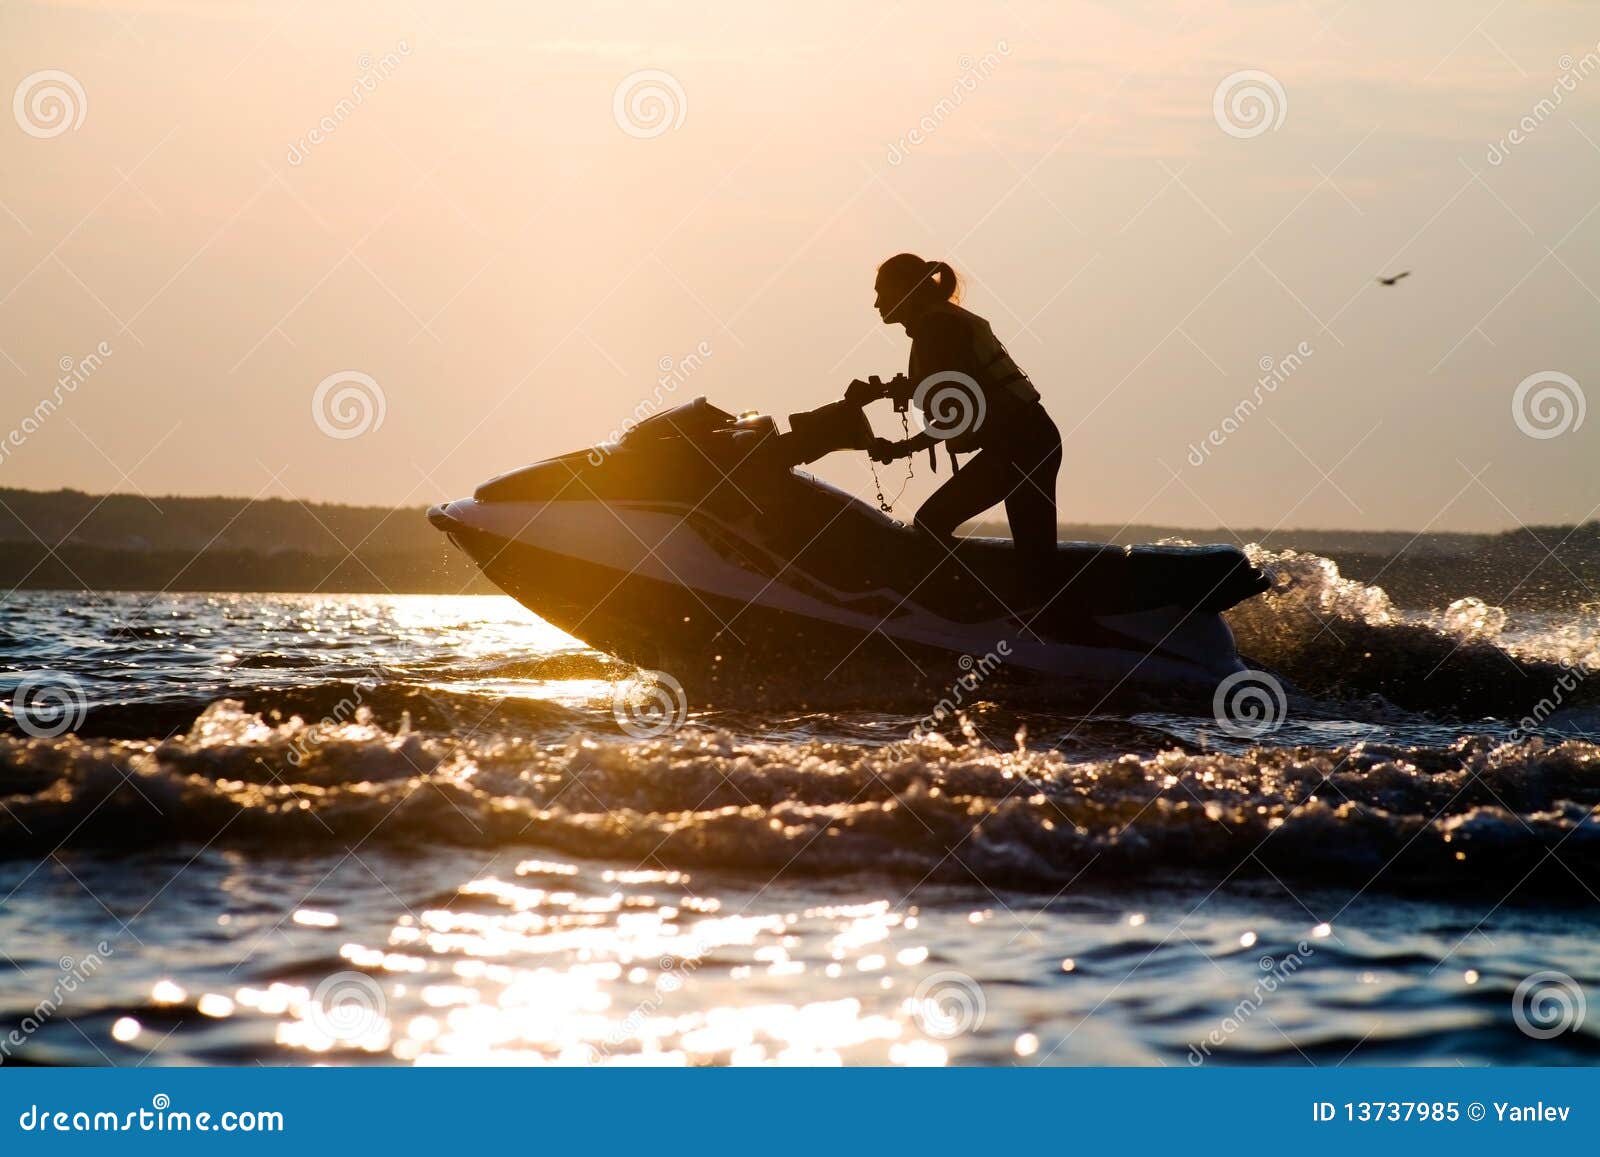 Beautiful Girl Riding Her Jet Skis Stock Image - Image of 